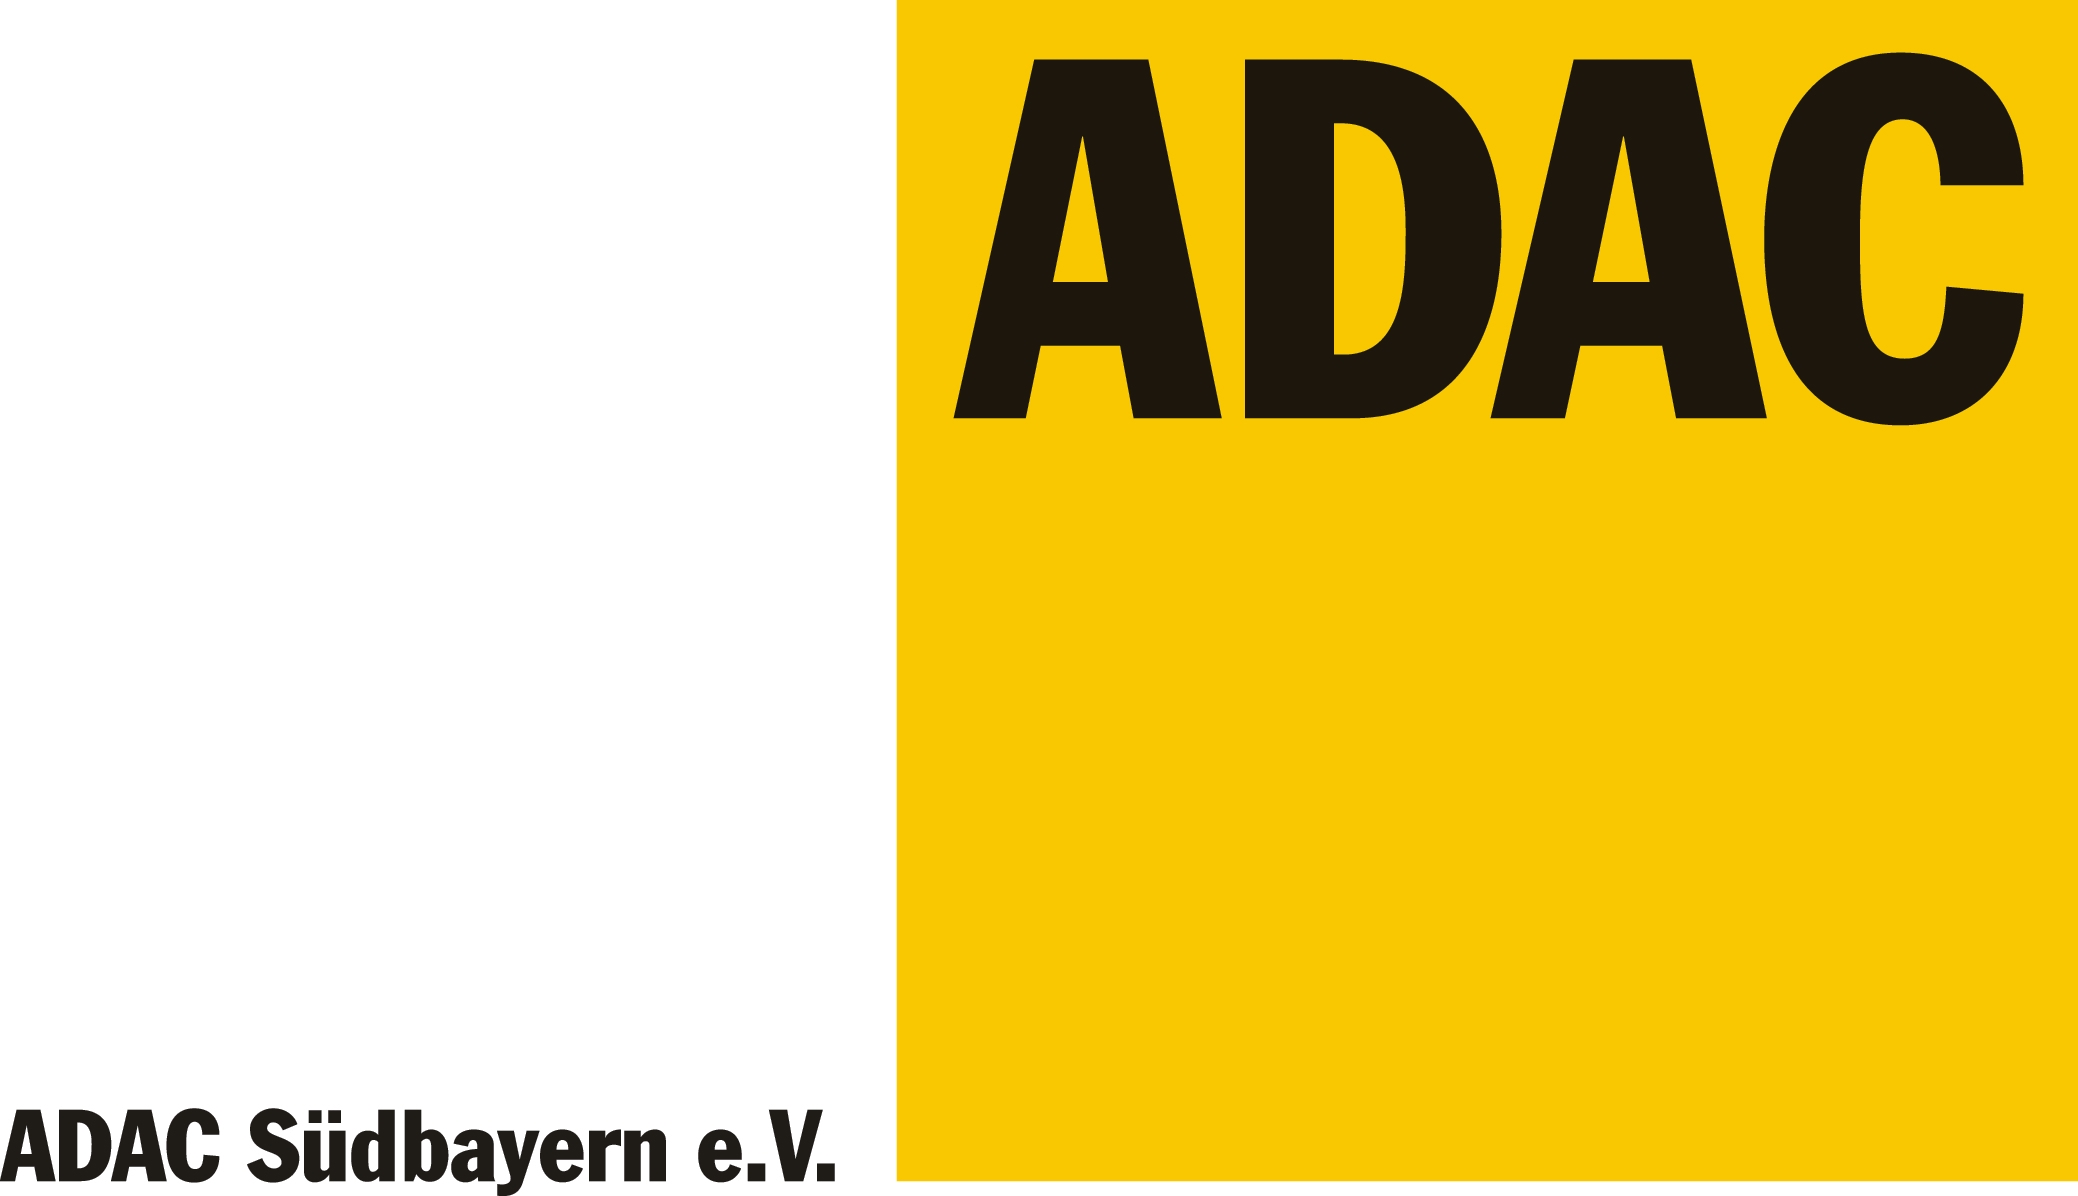 ADAC Automotive